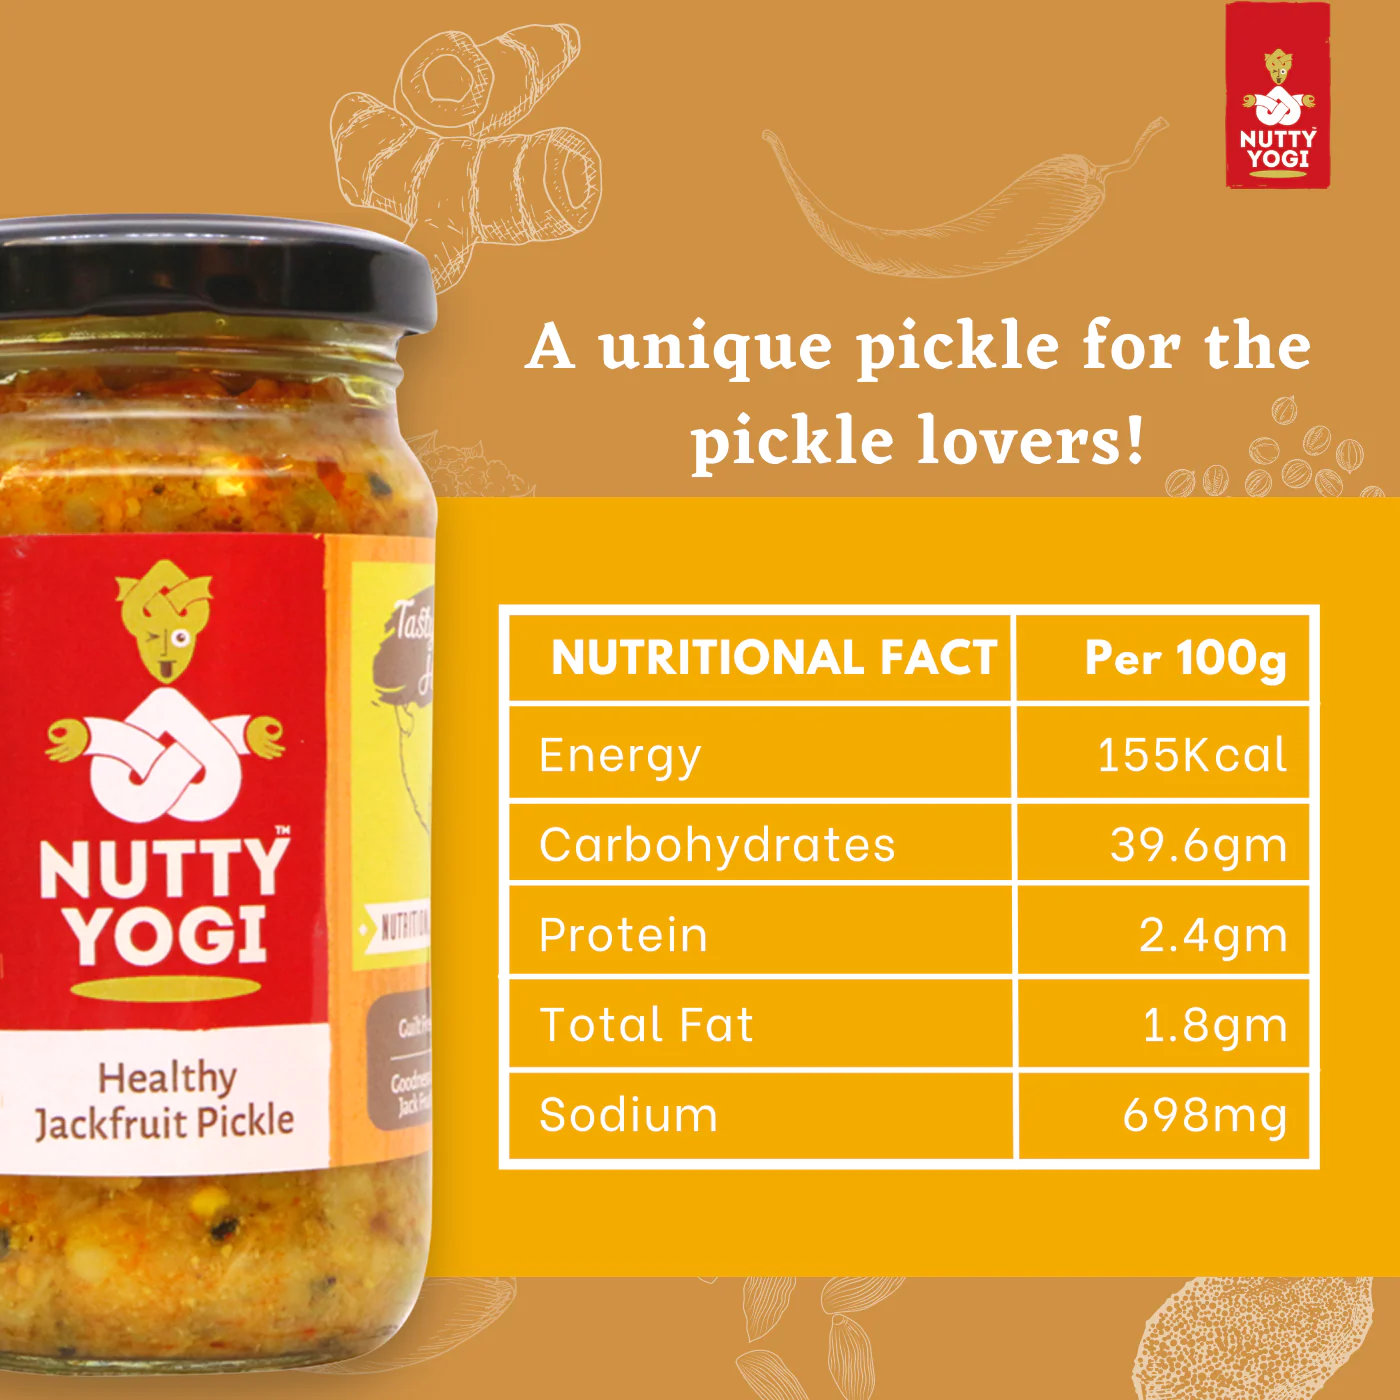 Product: Nutty Yogi Healthy Jackfruit Pickle 200 g